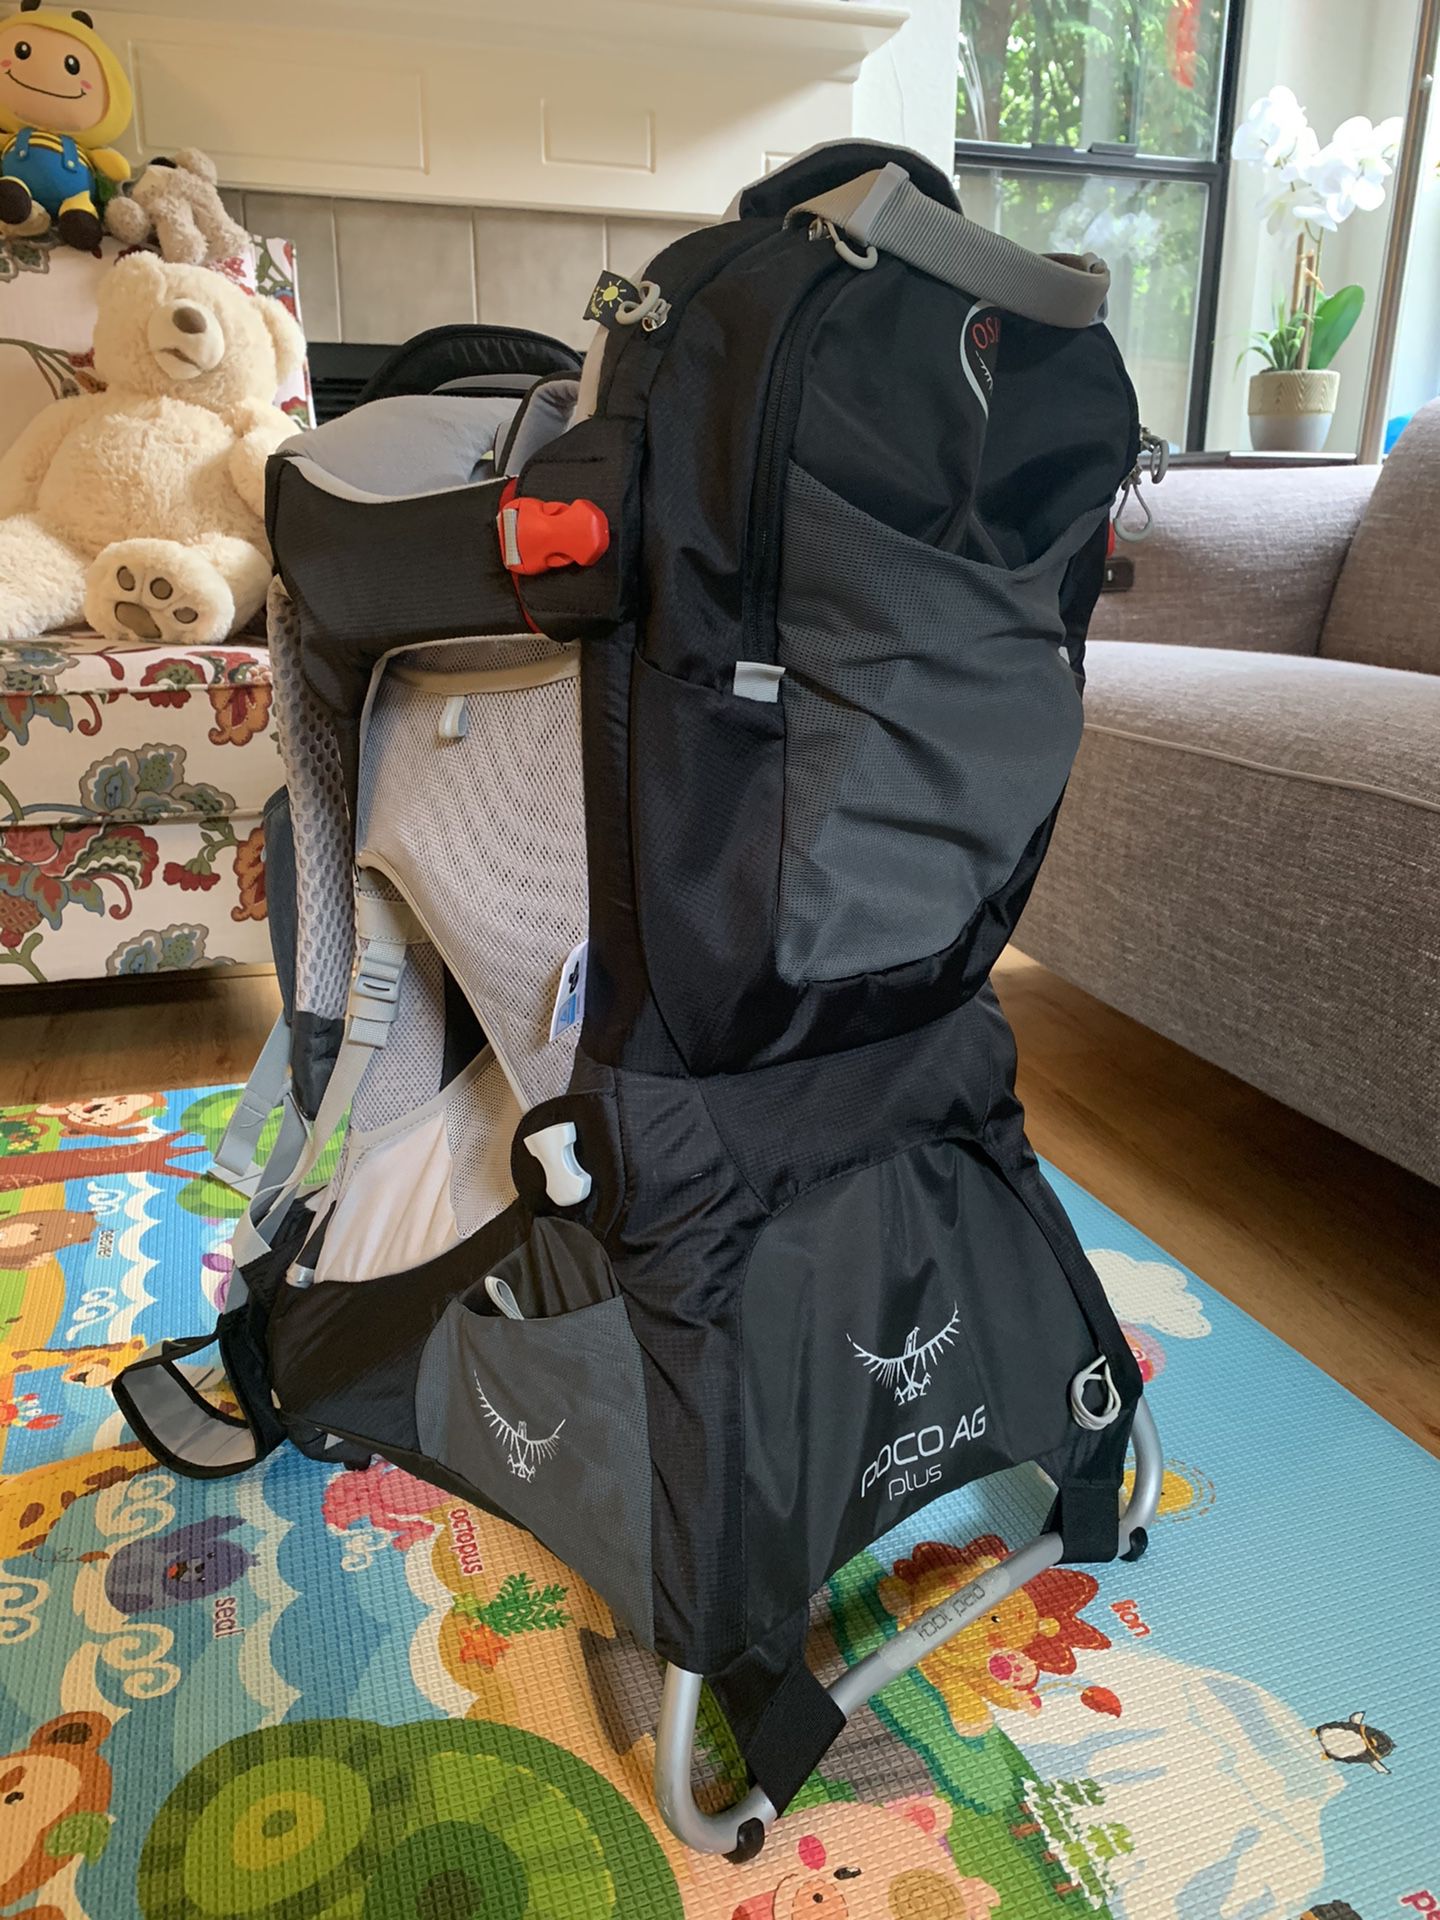 Ospreys POCO AG Plus child carrier backpack